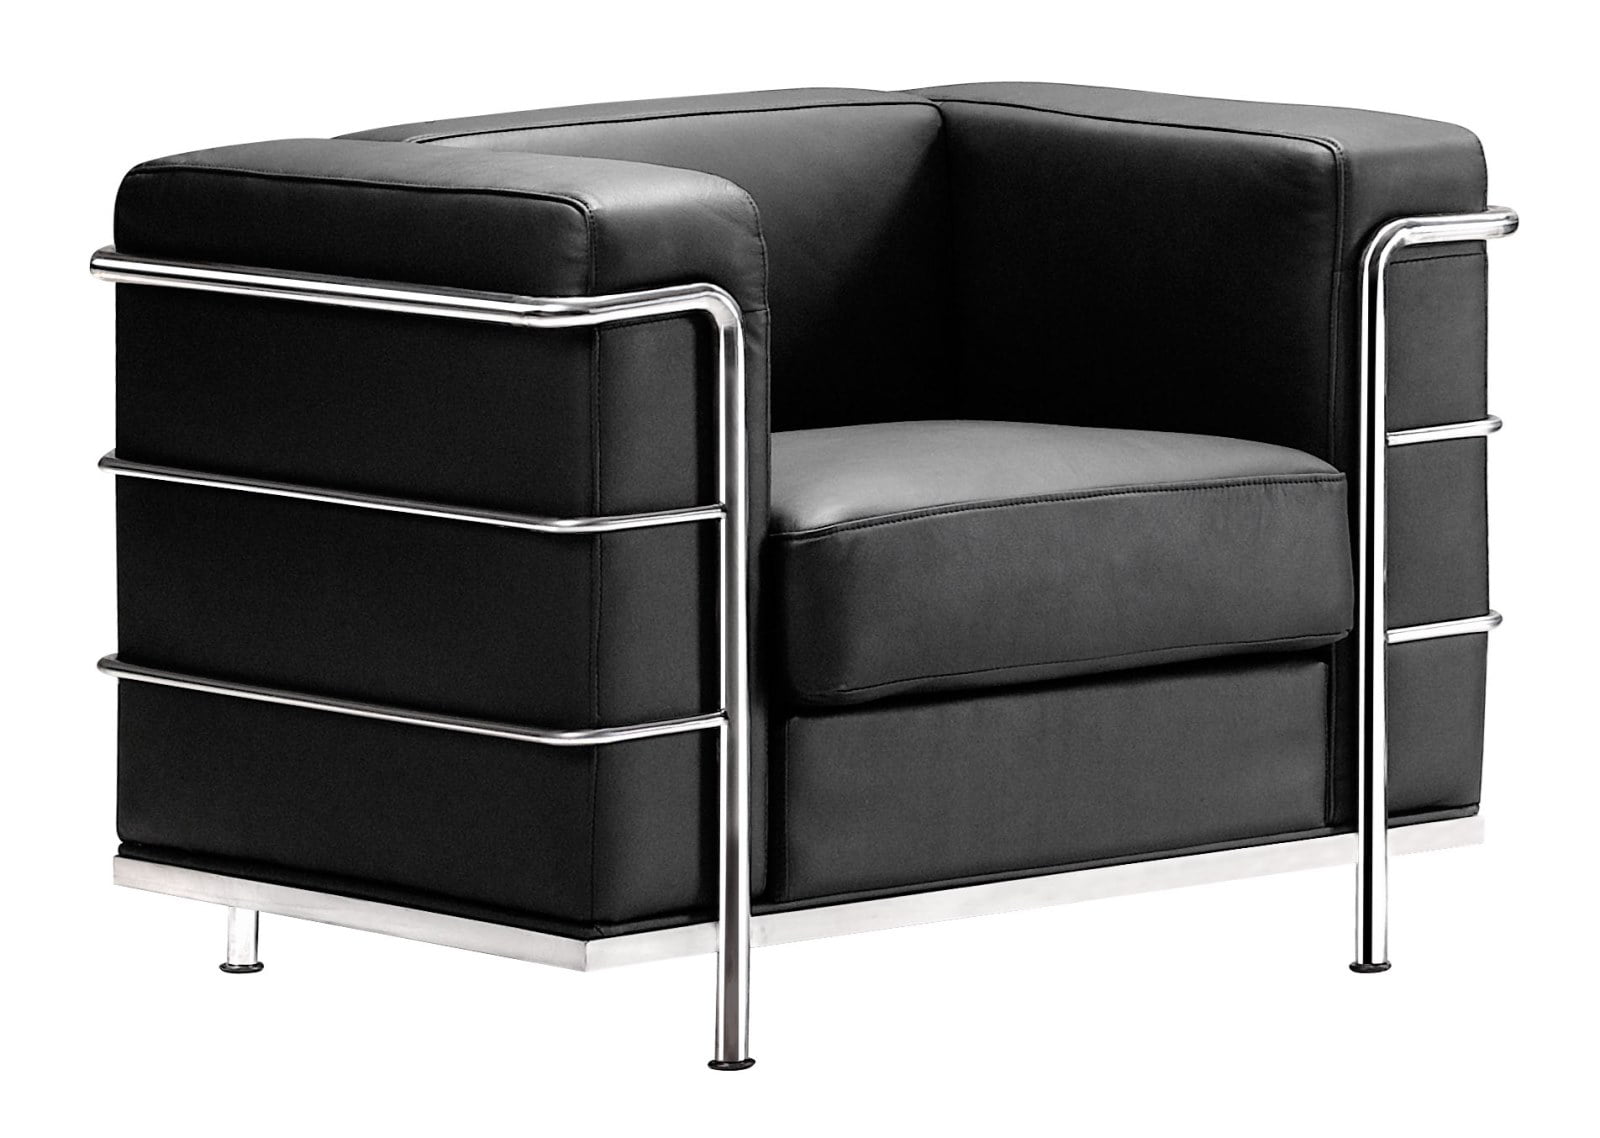 Modern Contemporary Living Room Arm Chair Black Leather Chrome Steel Walmart Com Walmart Com